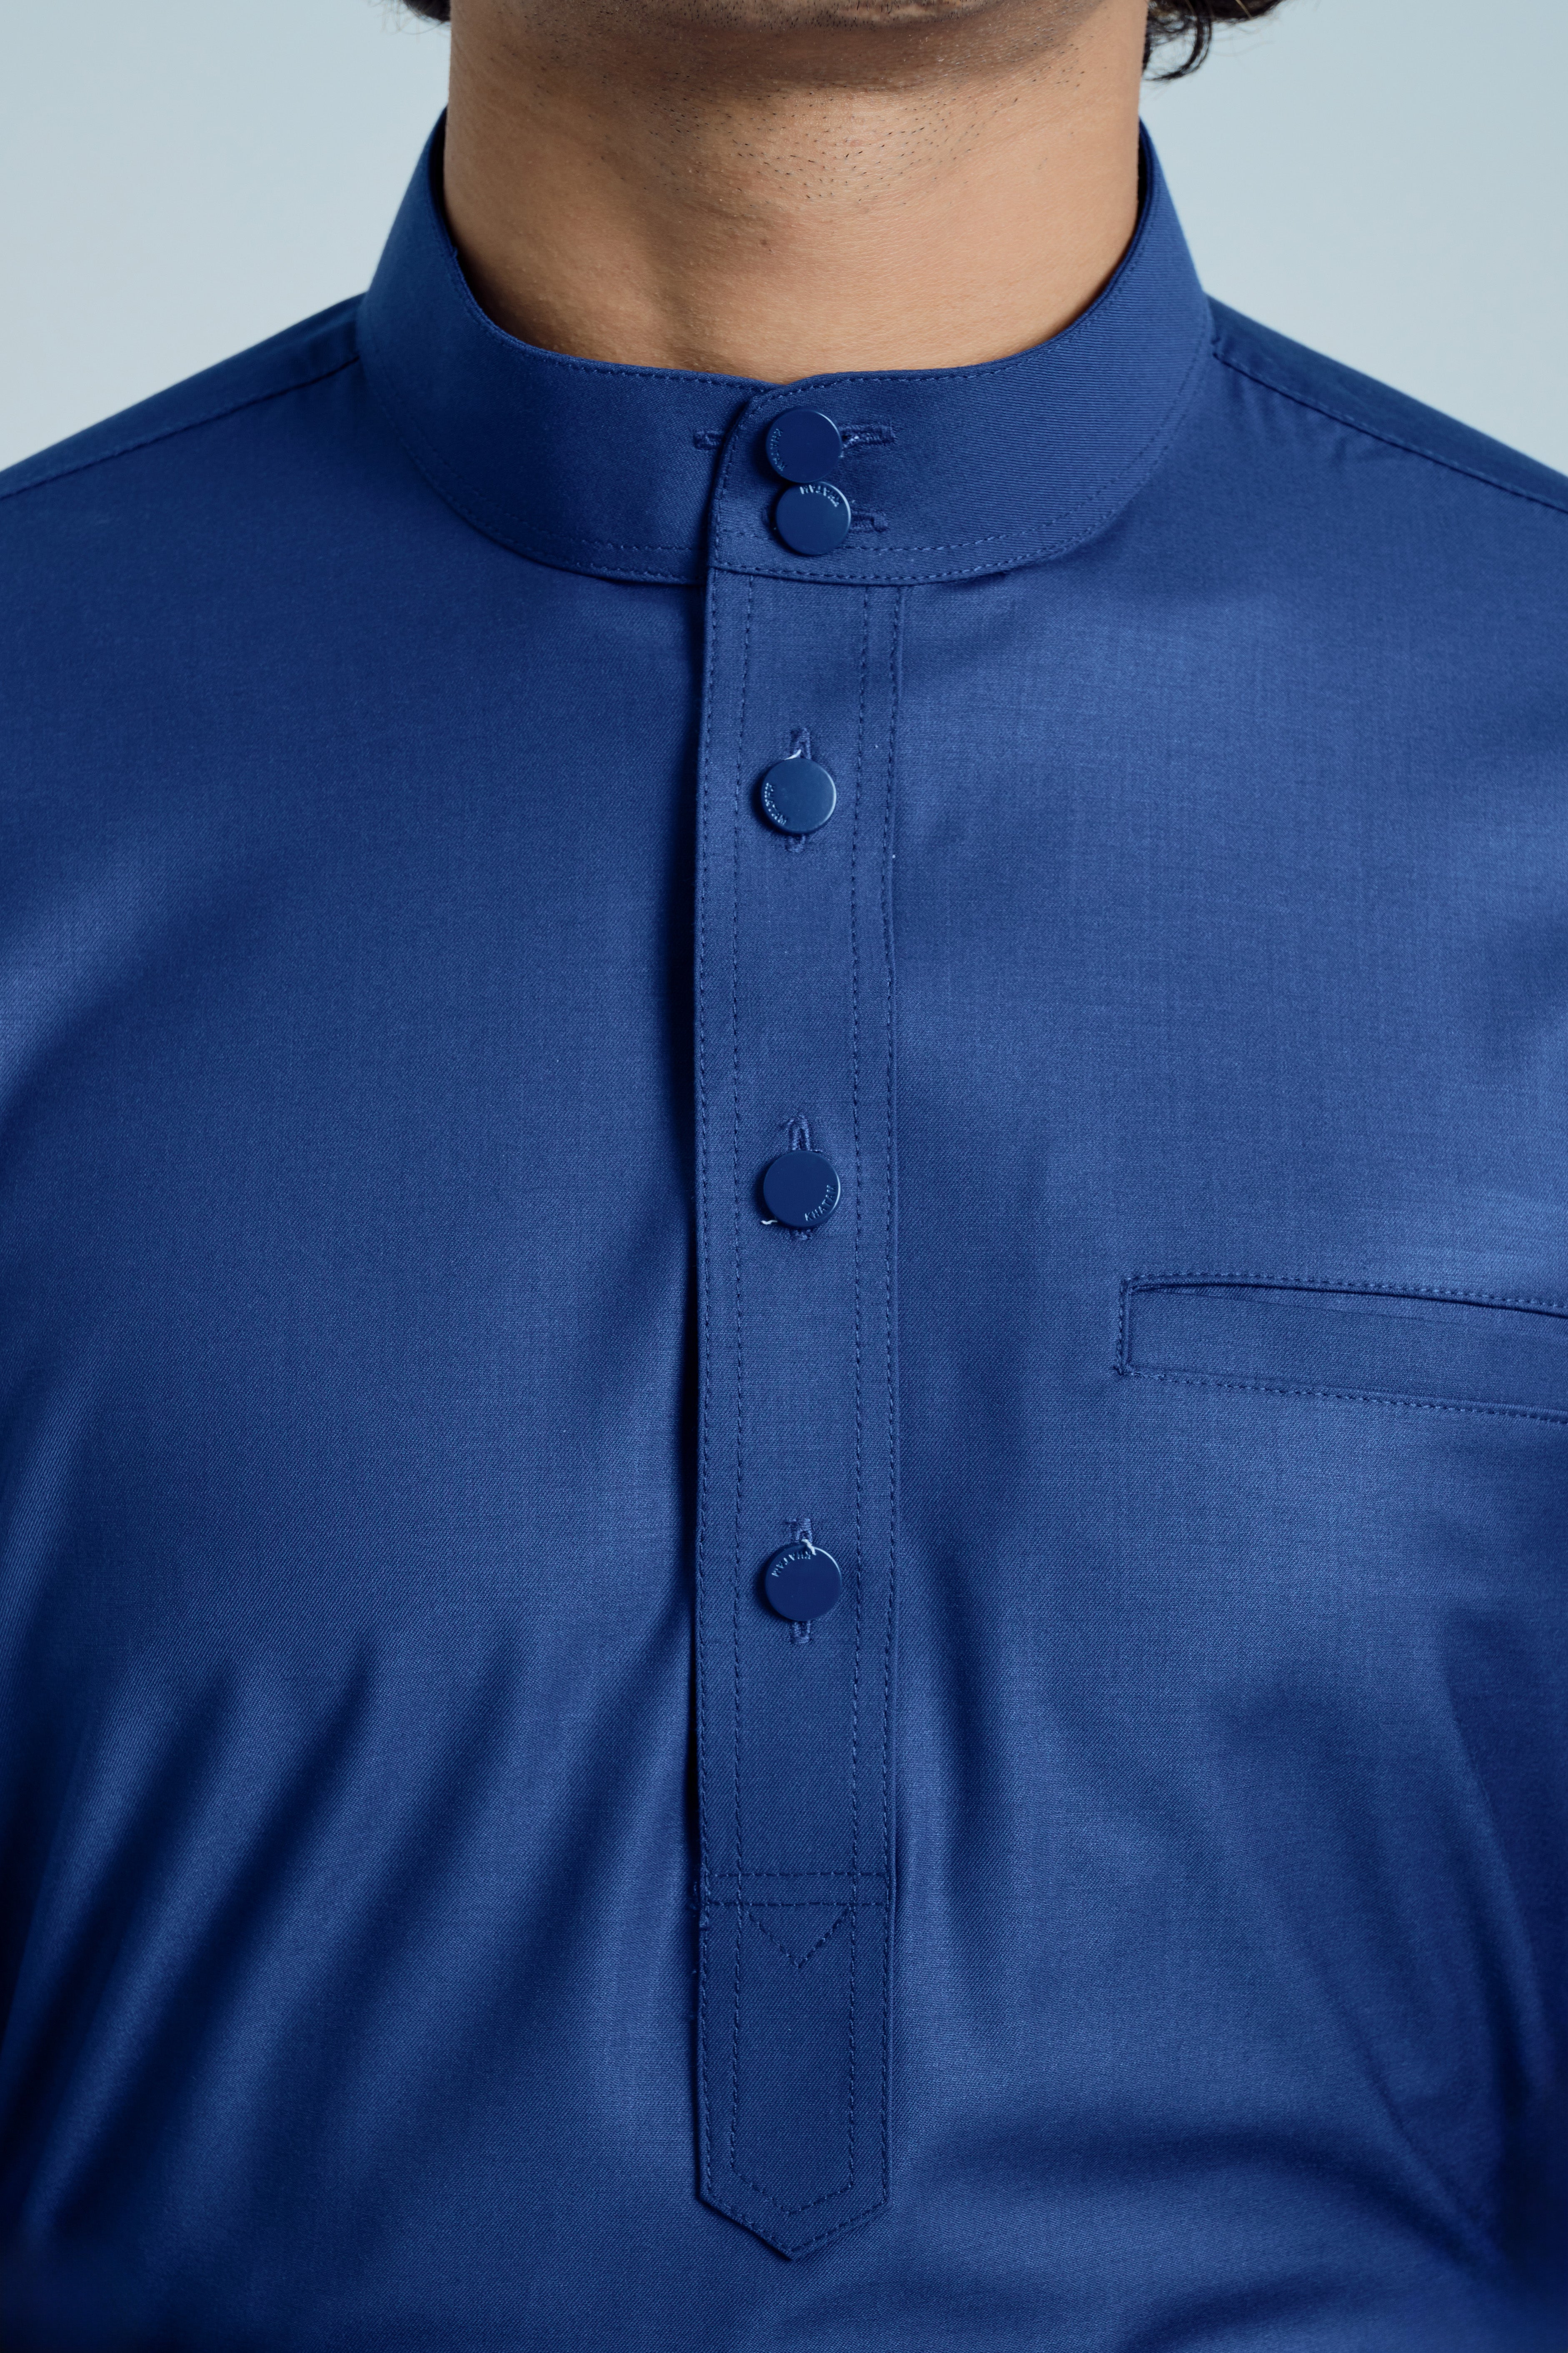 Patawali Baju Melayu Cekak Musang - True Blue